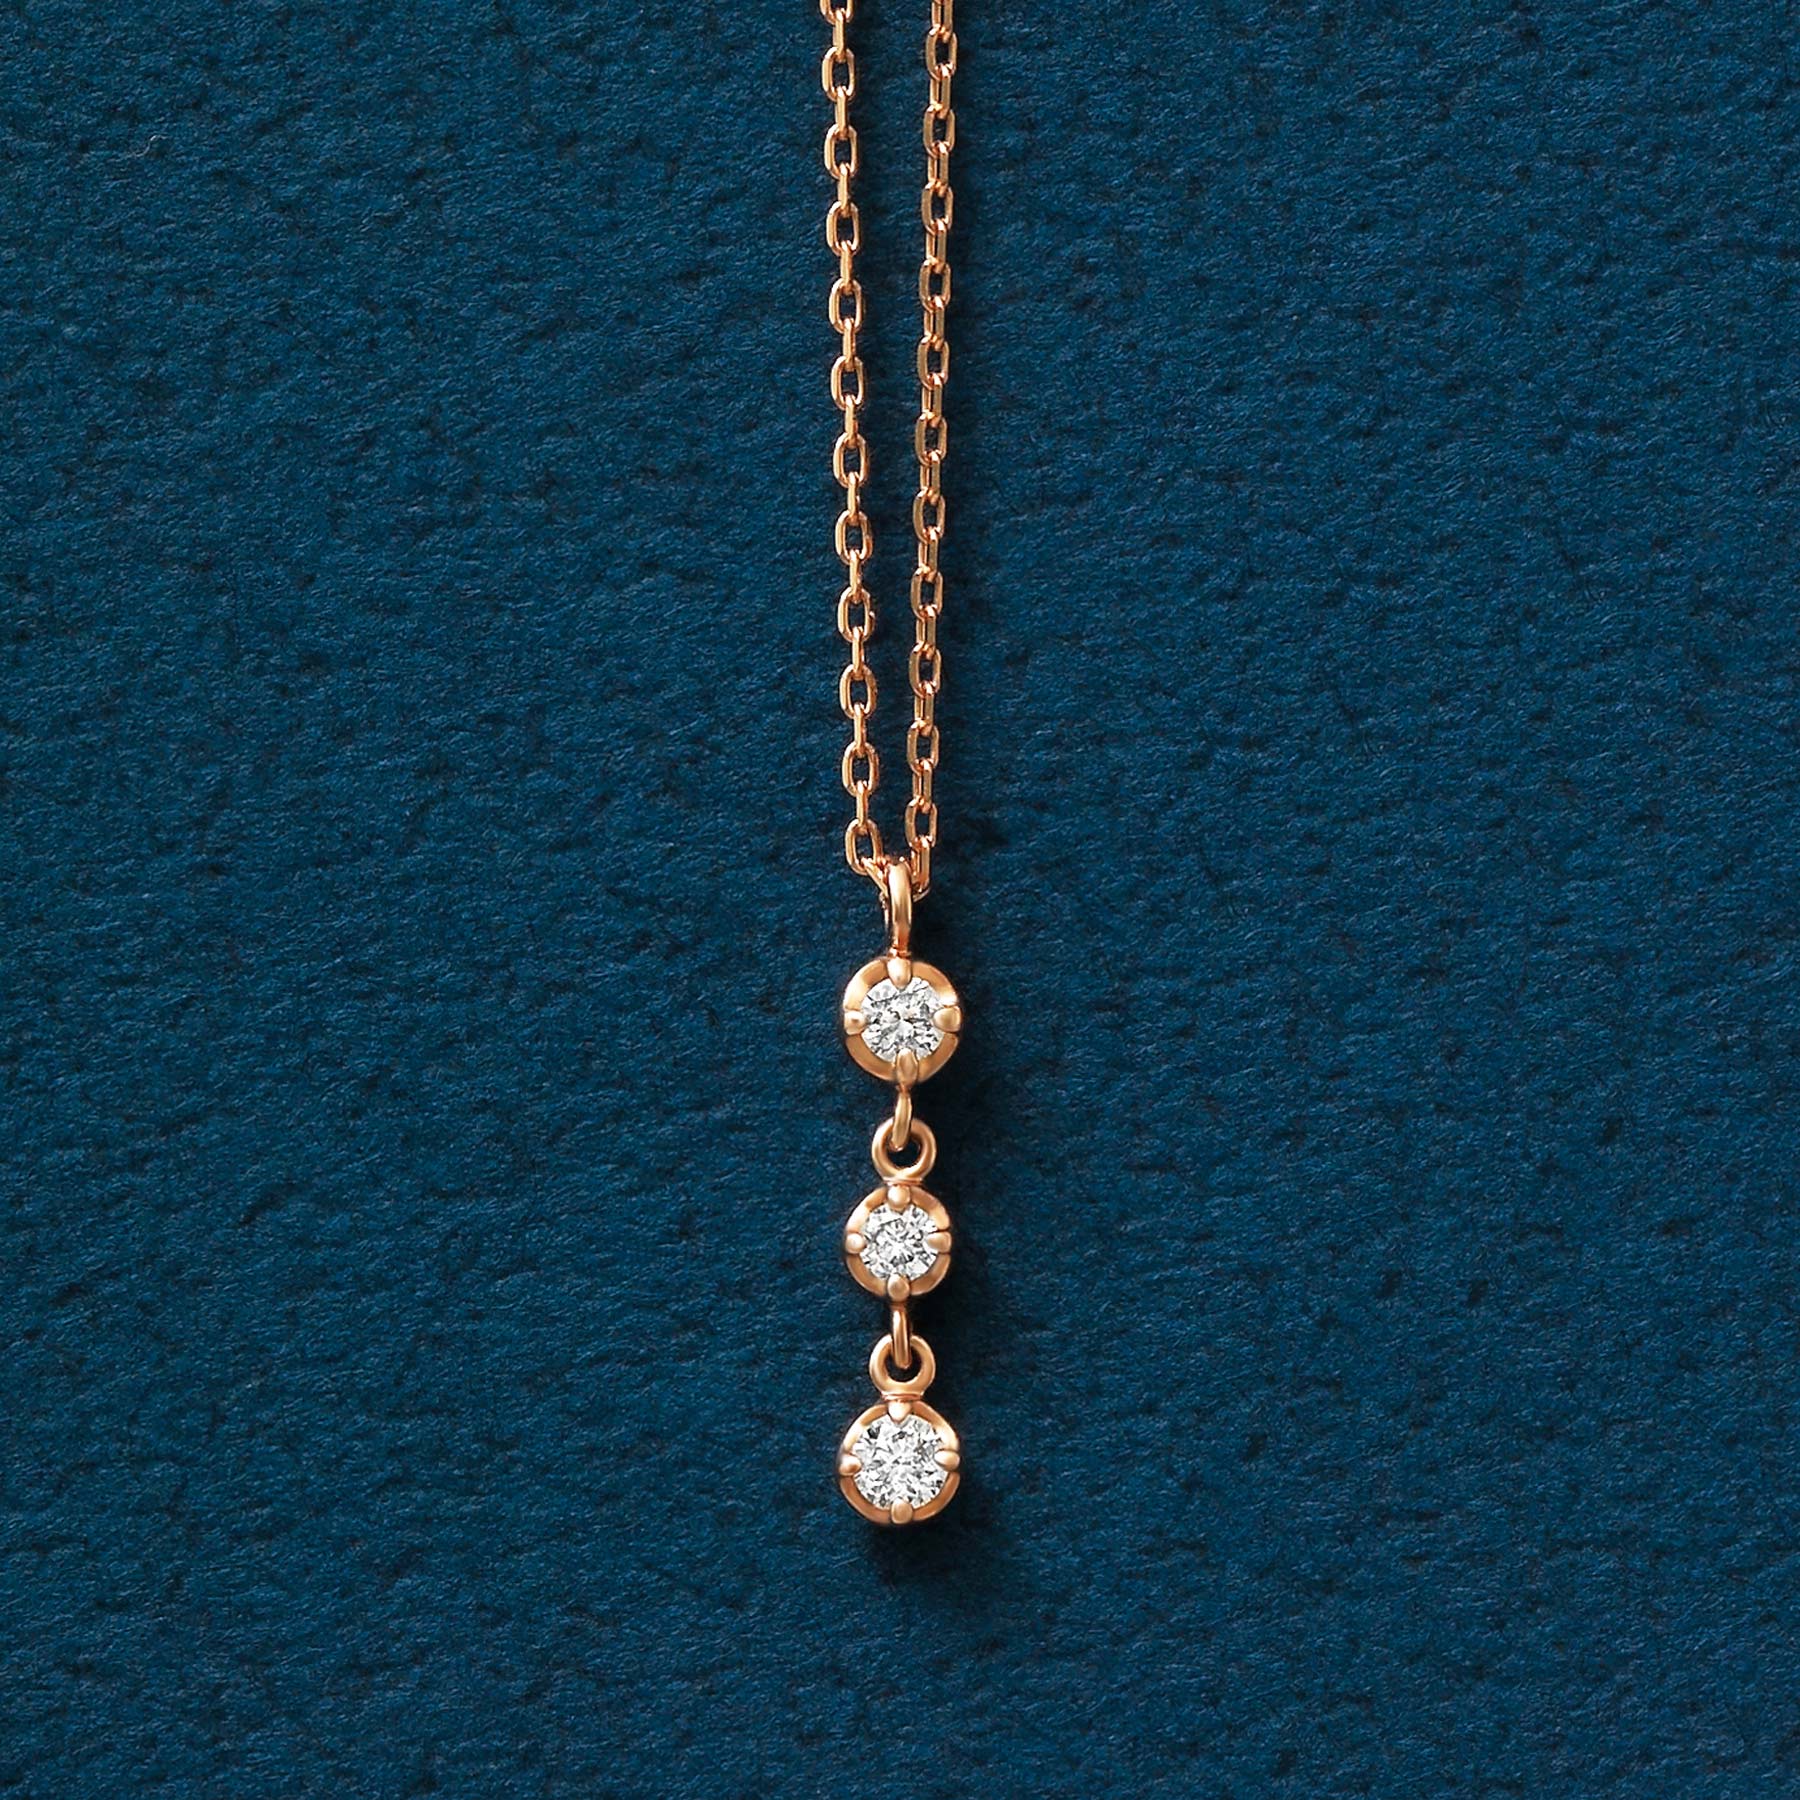 10K Rose Gold Diamond Trilogy Necklace - Product Image